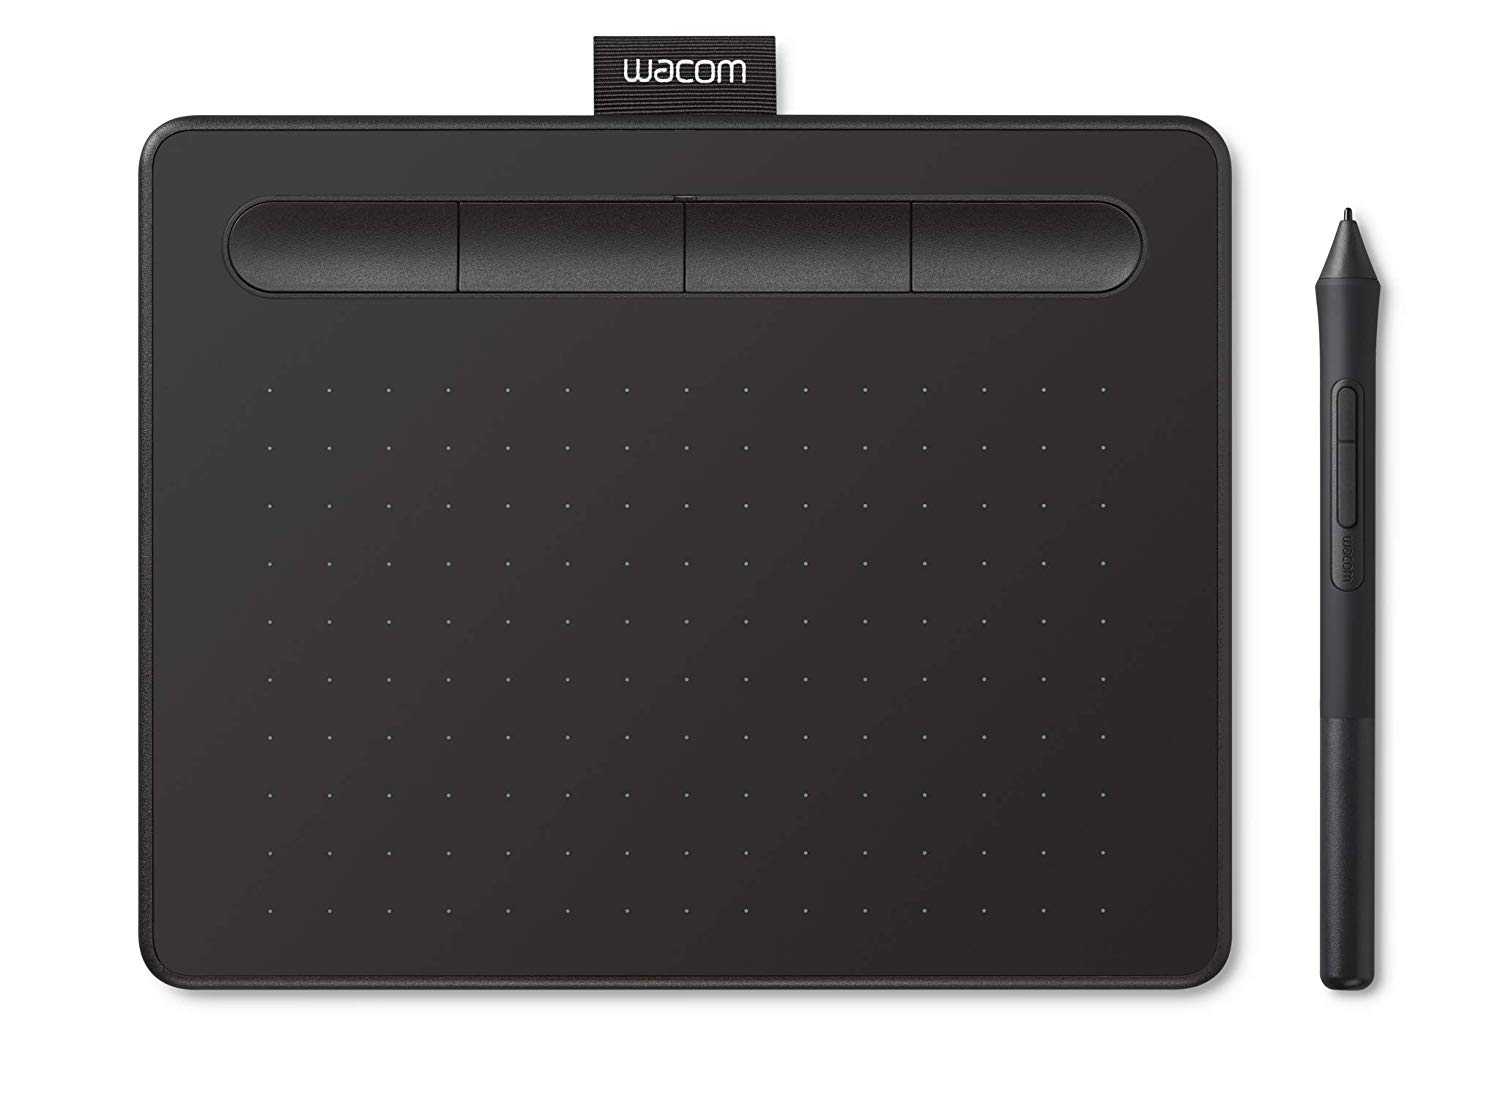 Графический планшет xiaomi mijia lcd small blackboard 13.5 inch (xmxhb02wc) — купить, цена и характеристики, отзывы